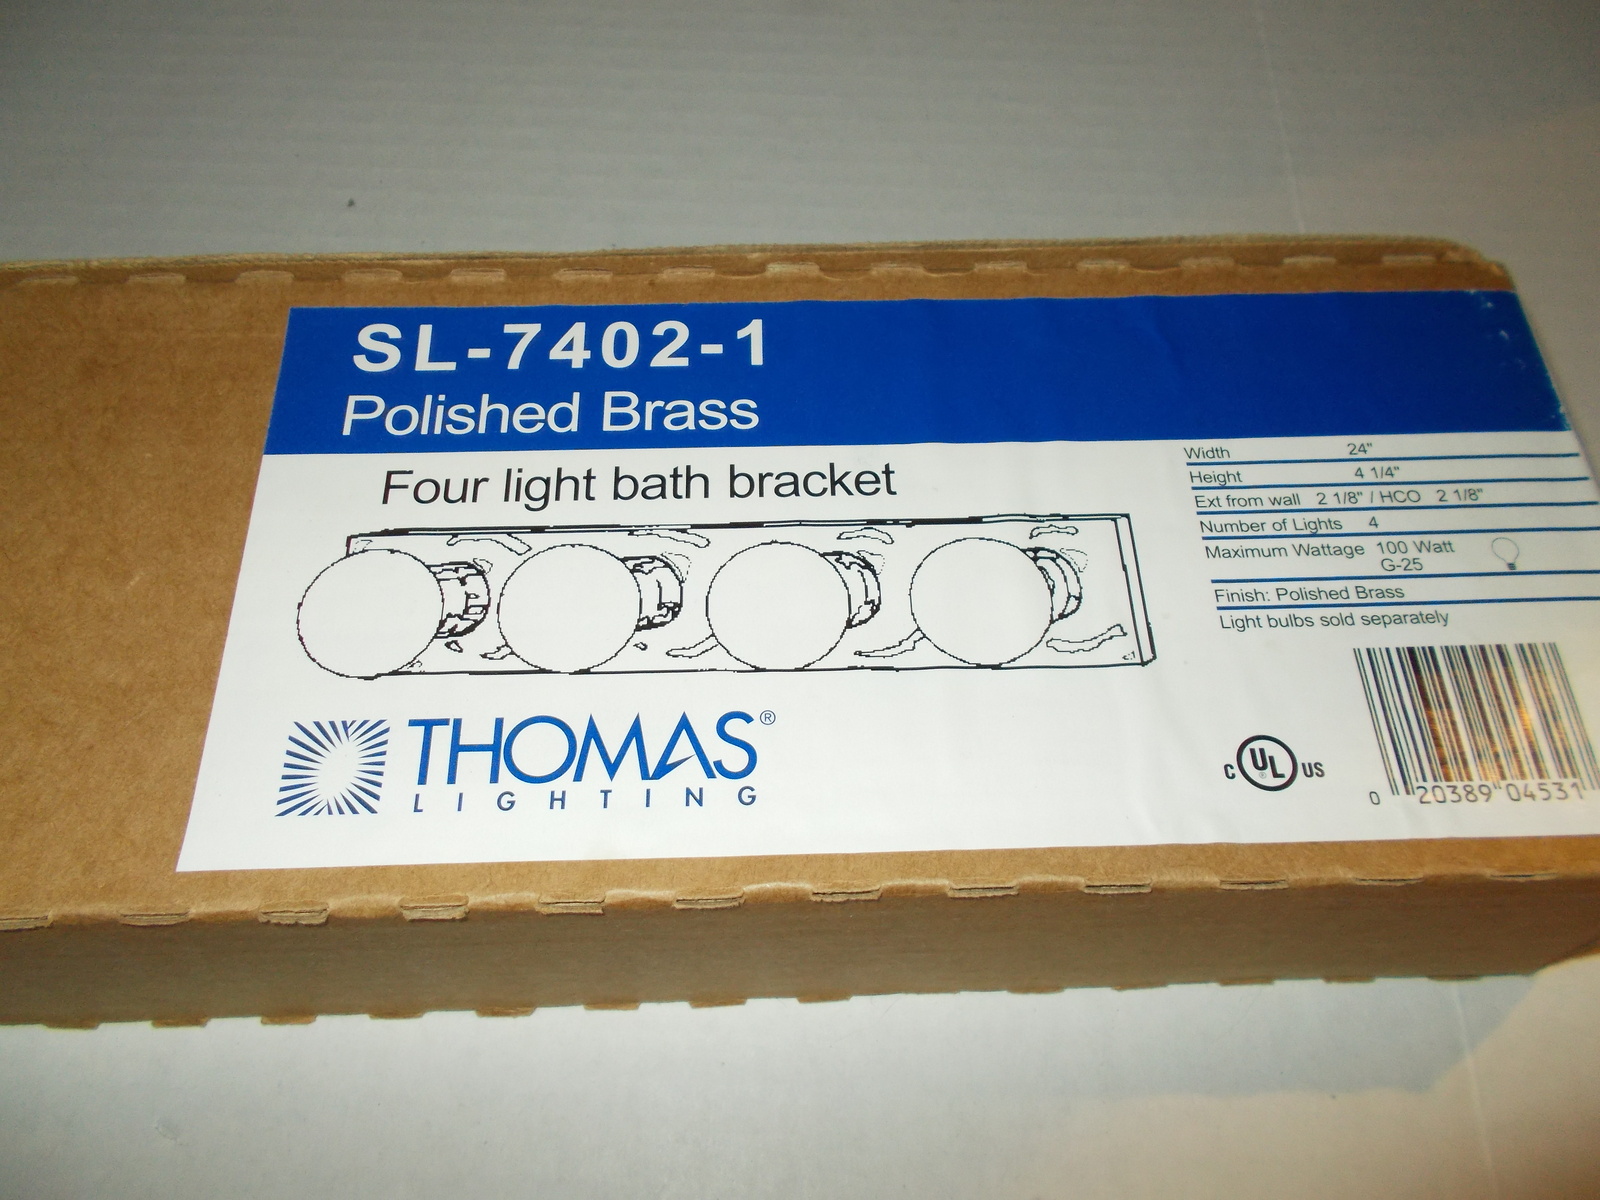 Brand New in Box Thomas Lighting Bronze Bathroom 4 Light Fixture SL-7402-1 - $13.50